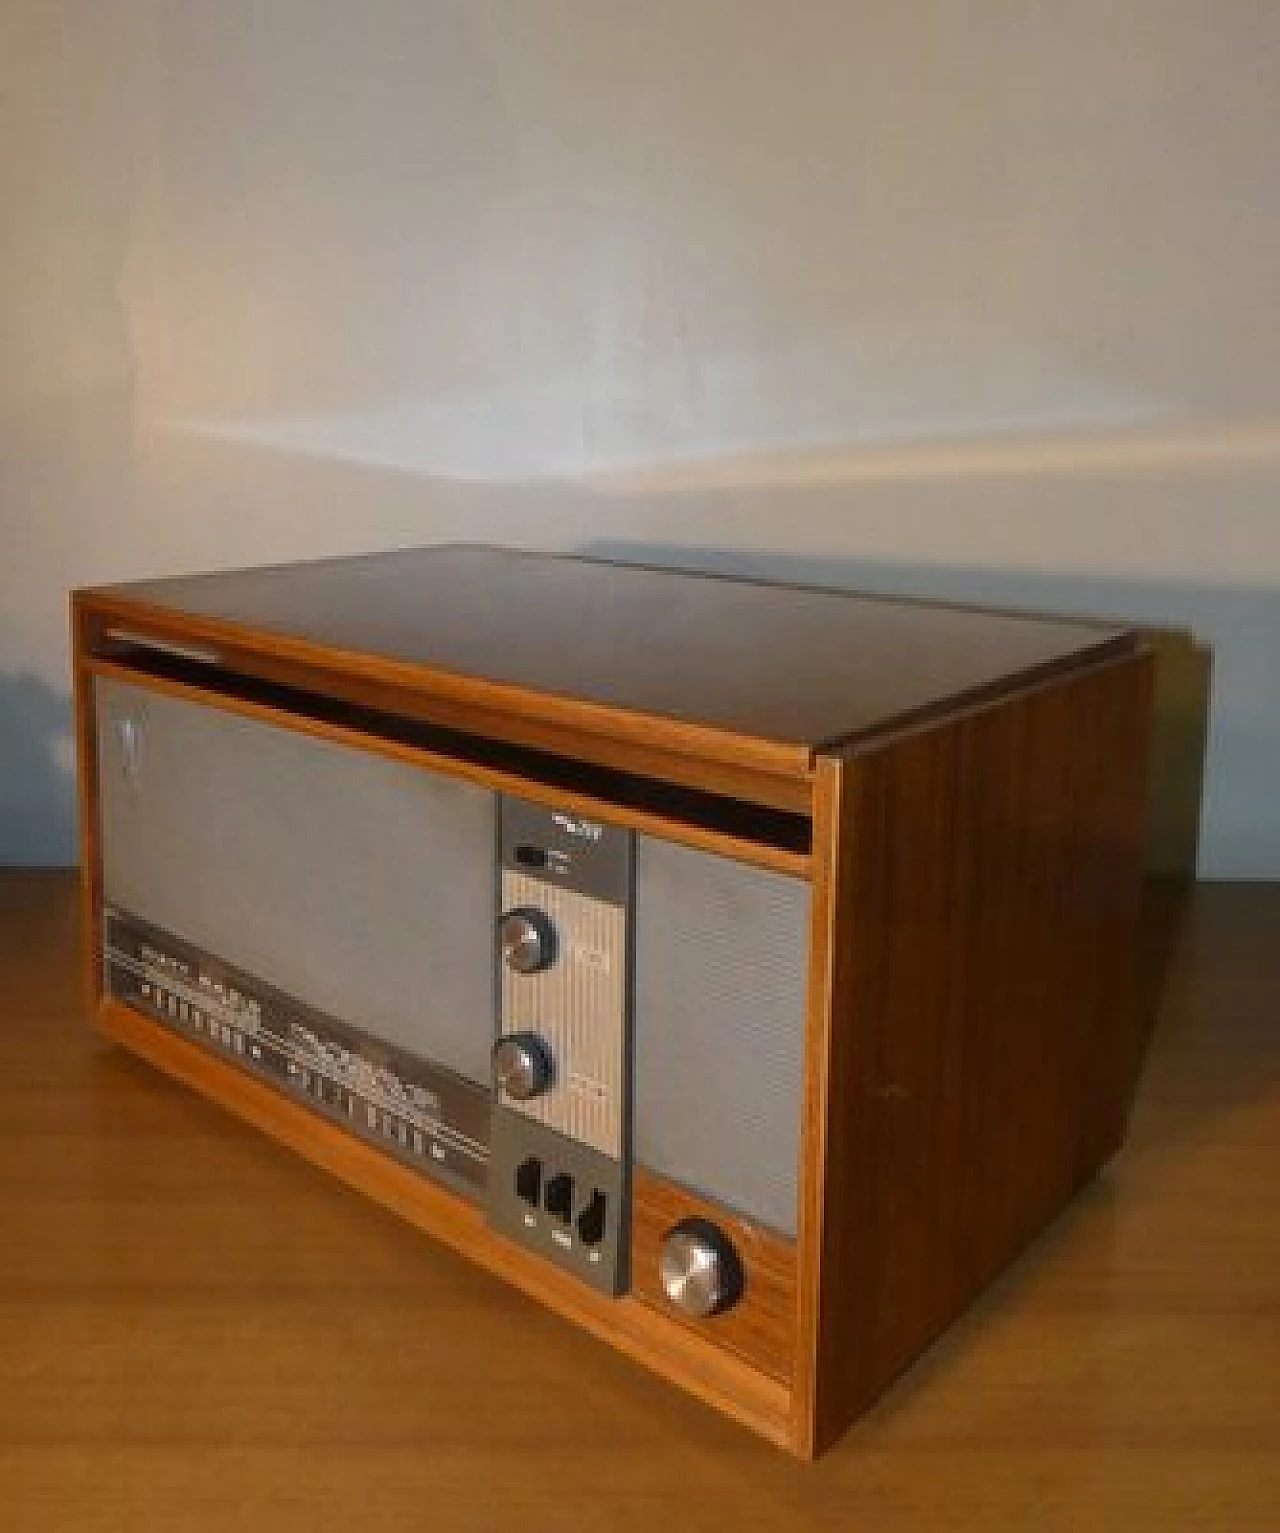 Wood and bakelite WR 718 turntable radio by Watt Radio, 1960s 5